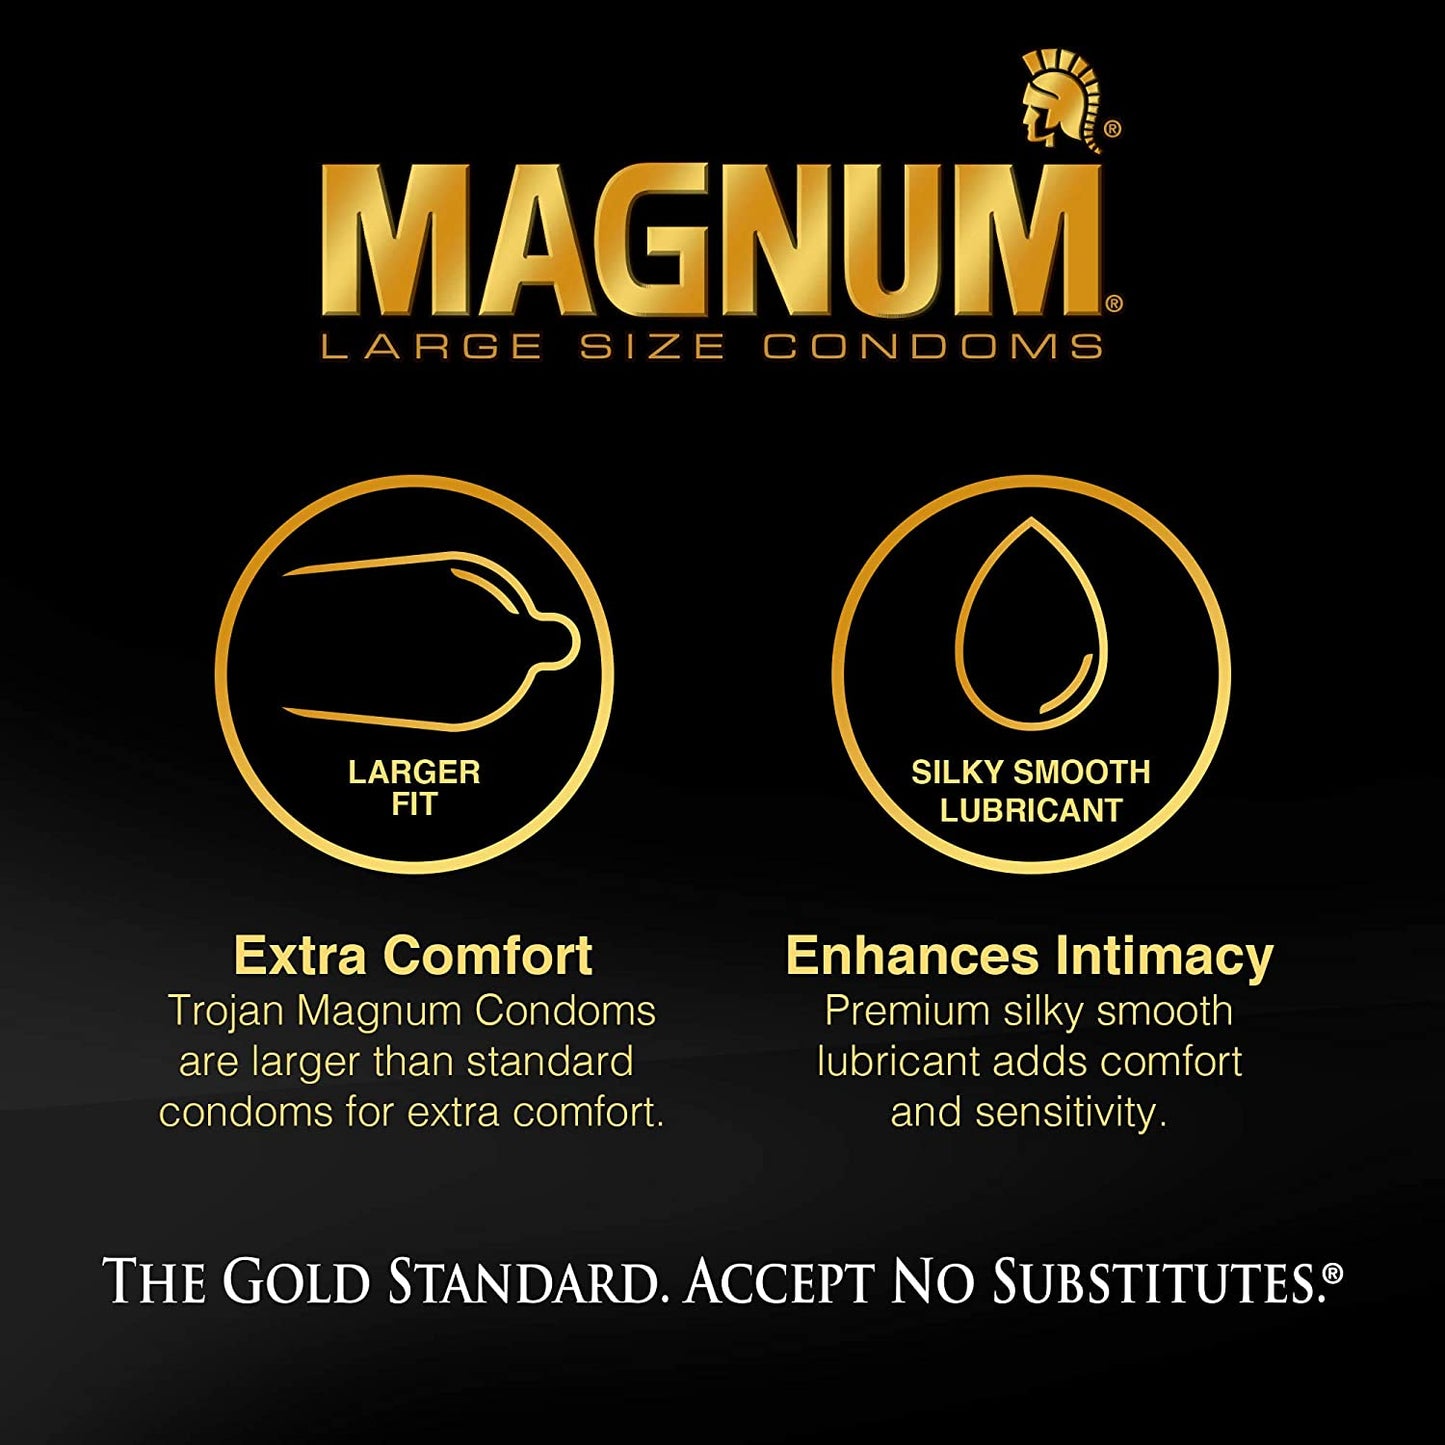 Trojan Magnum Large Size Lubricated Condoms "6-PACK"